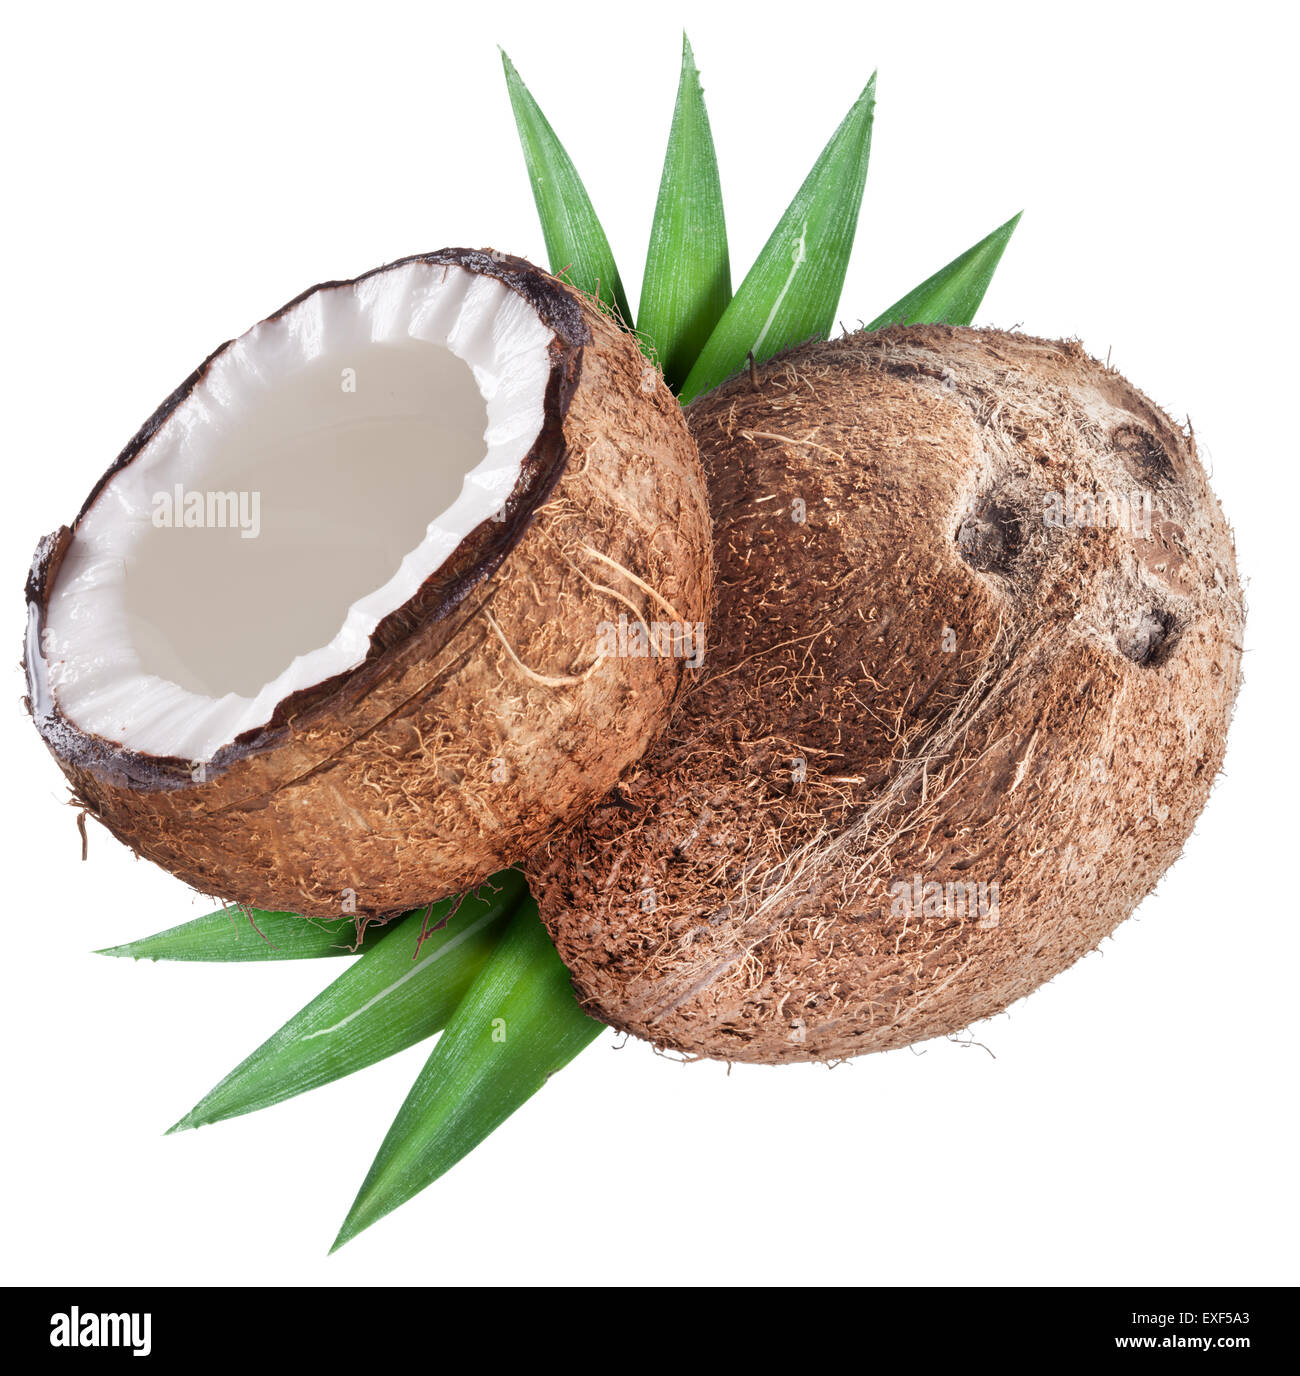 Kokosnuss mit Blättern. Datei enthält Beschneidungspfade. Stockfoto